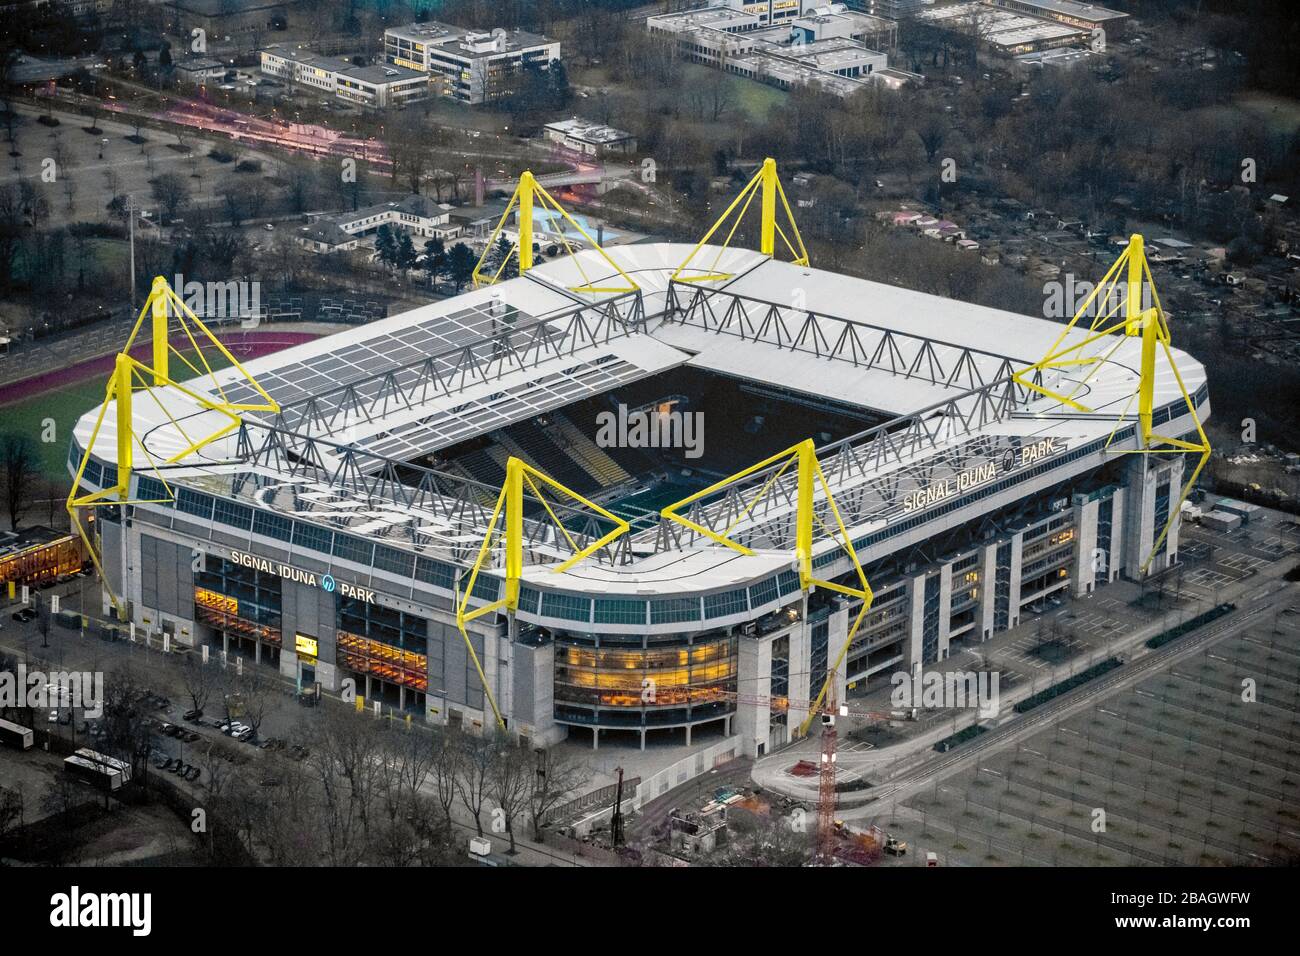 , stadium Westfalenstadion of Dortmund BVB, 17.12.2013, aerial view, Germany, North Rhine-Westphalia, Ruhr Area, Dortmund Stock Photo